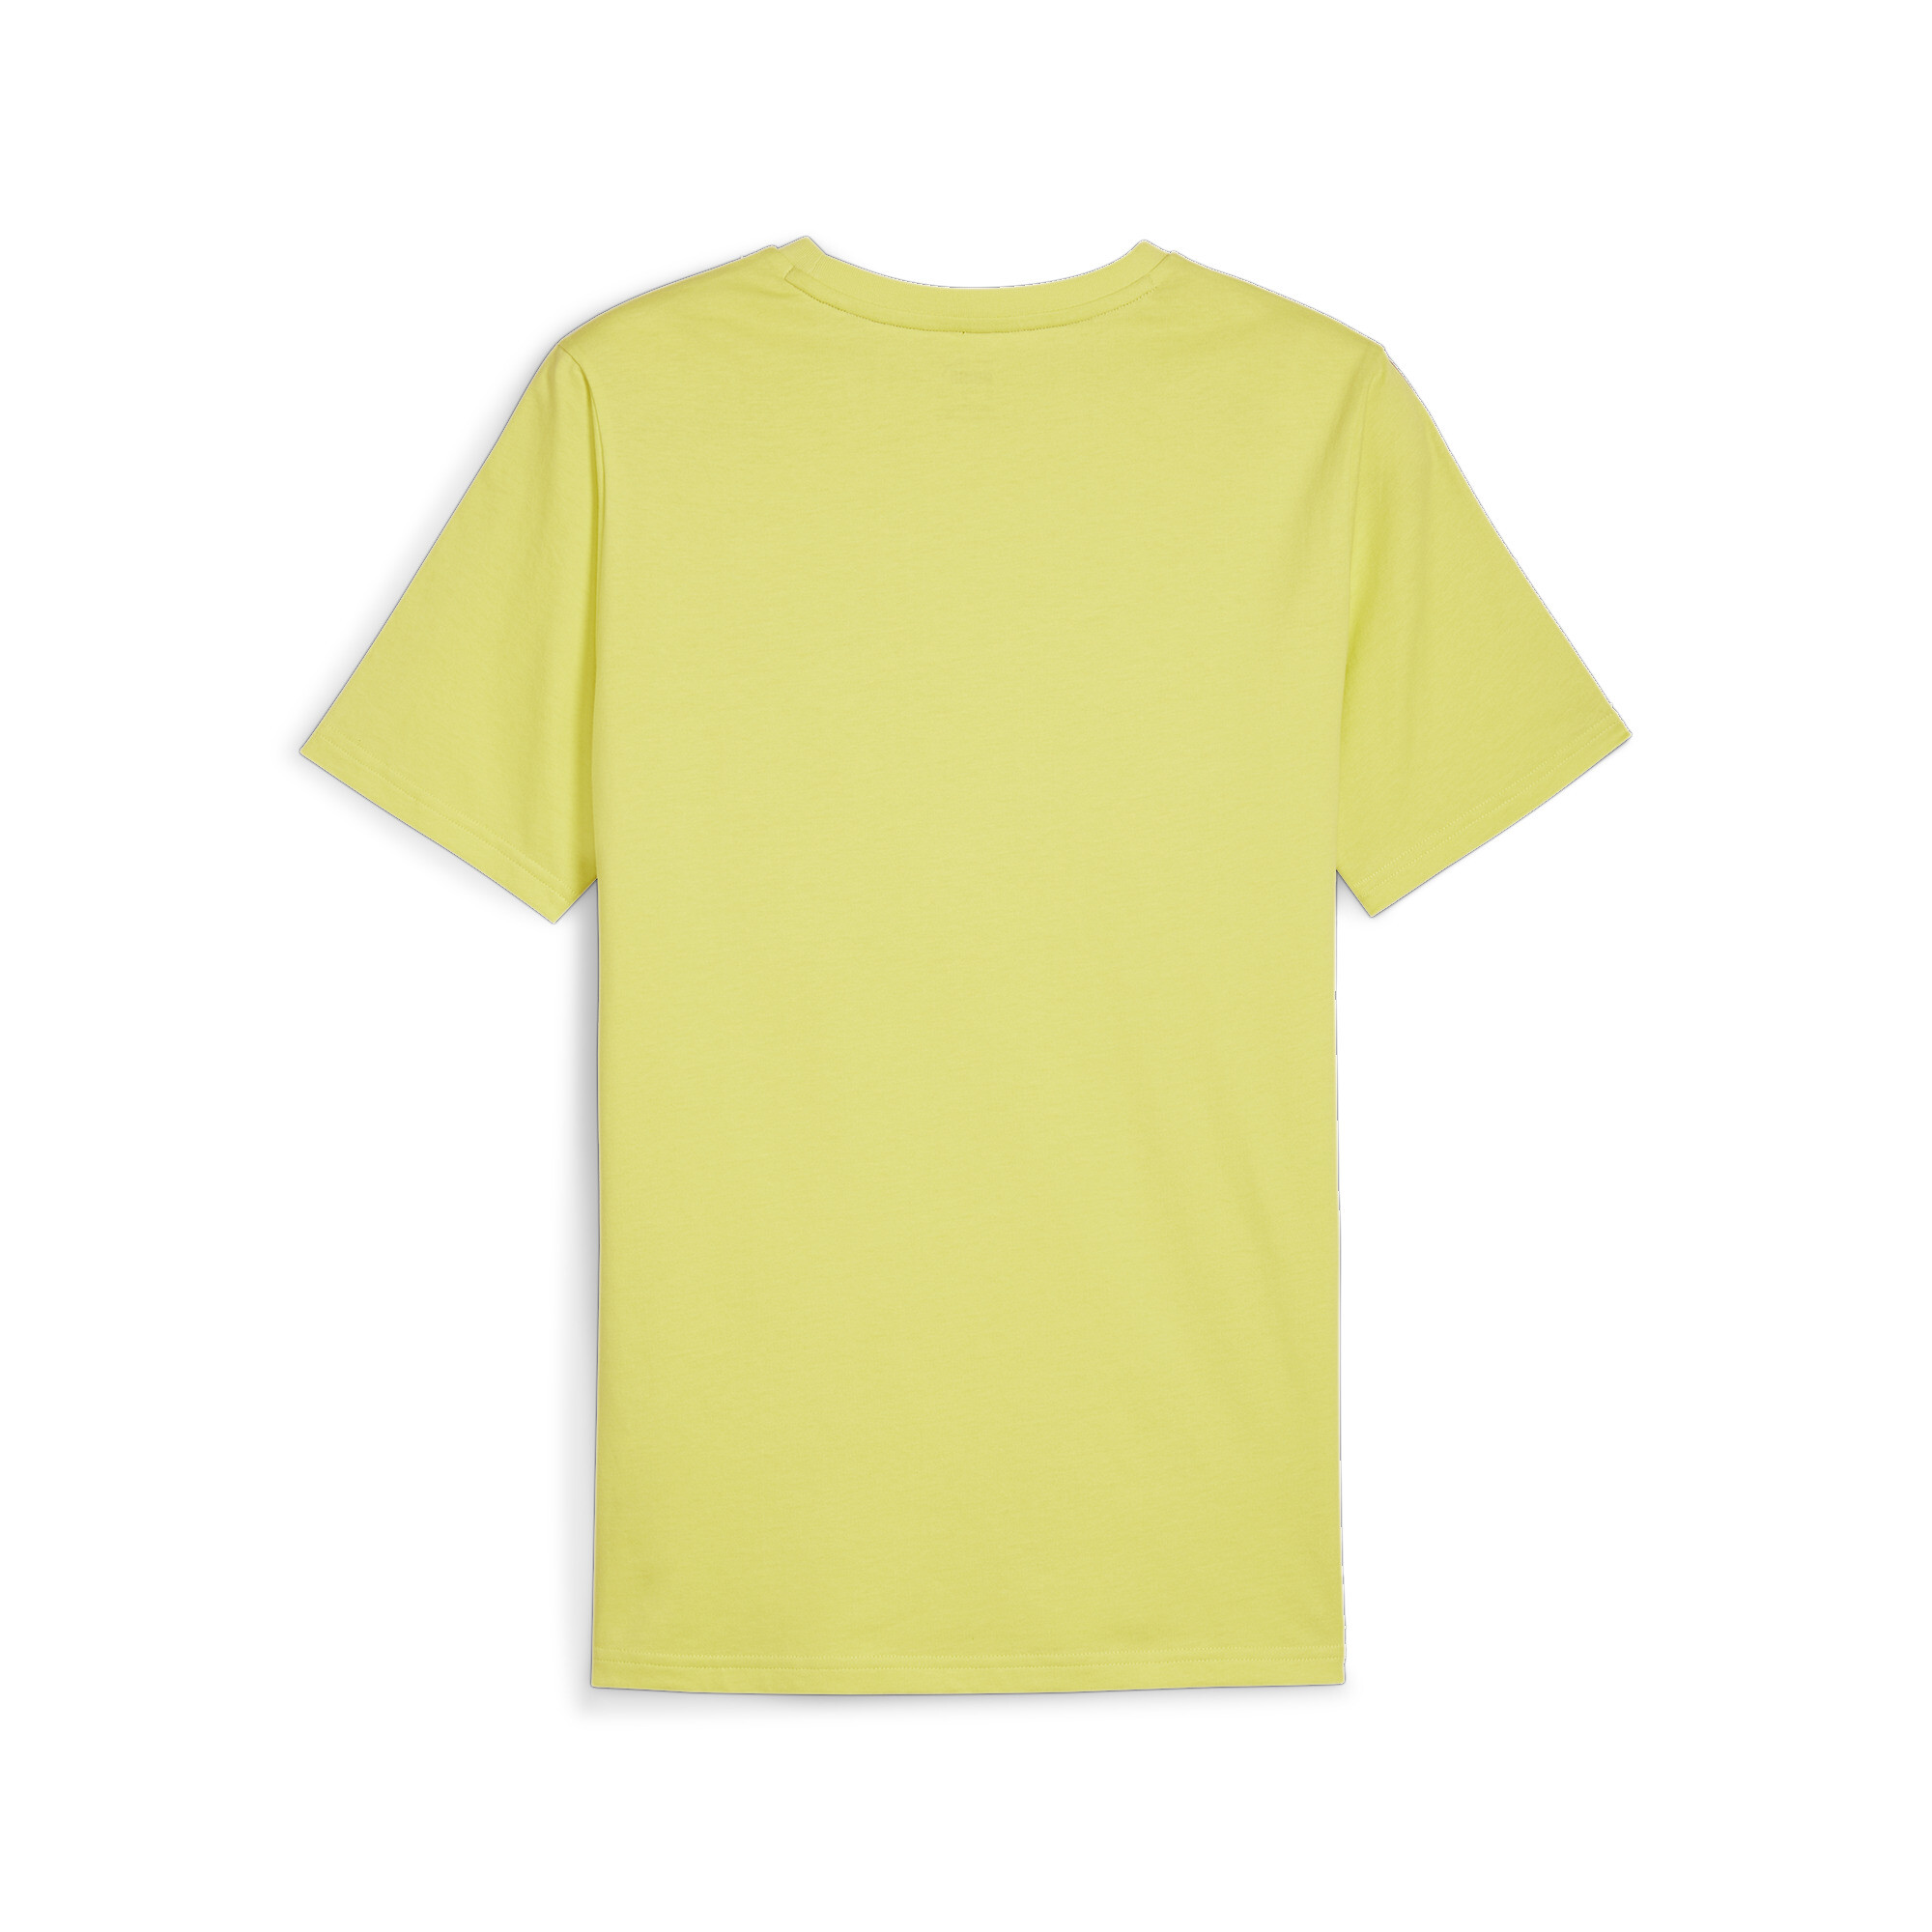 Men's Puma Essentials+ Tape's T-Shirt, Green, Size XL, Clothing